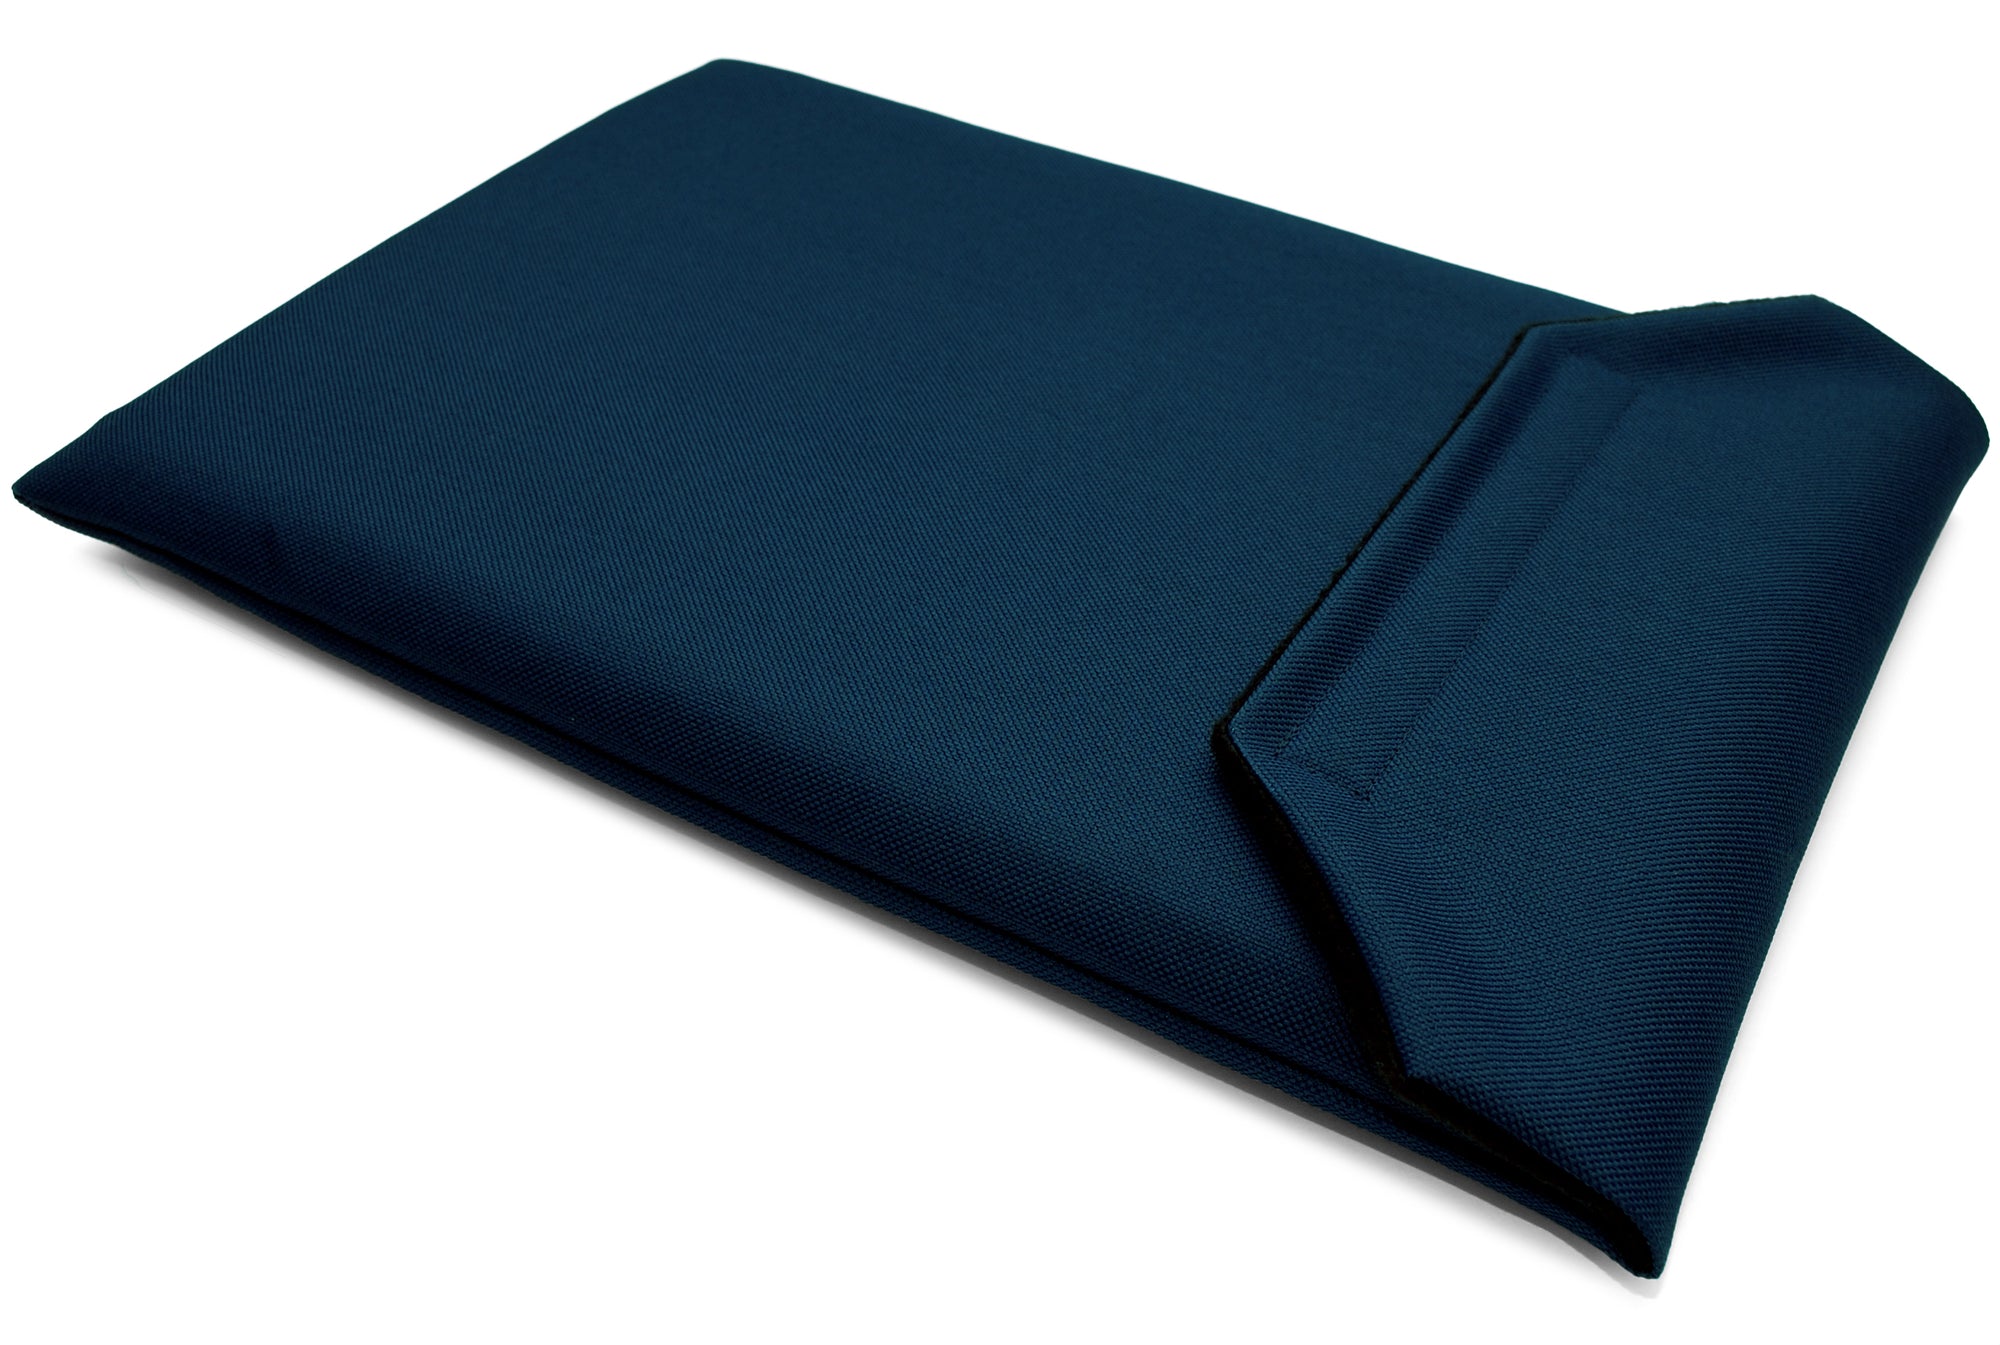 Dell Inspiron 14 7000 Sleeve Case - Navy Blue